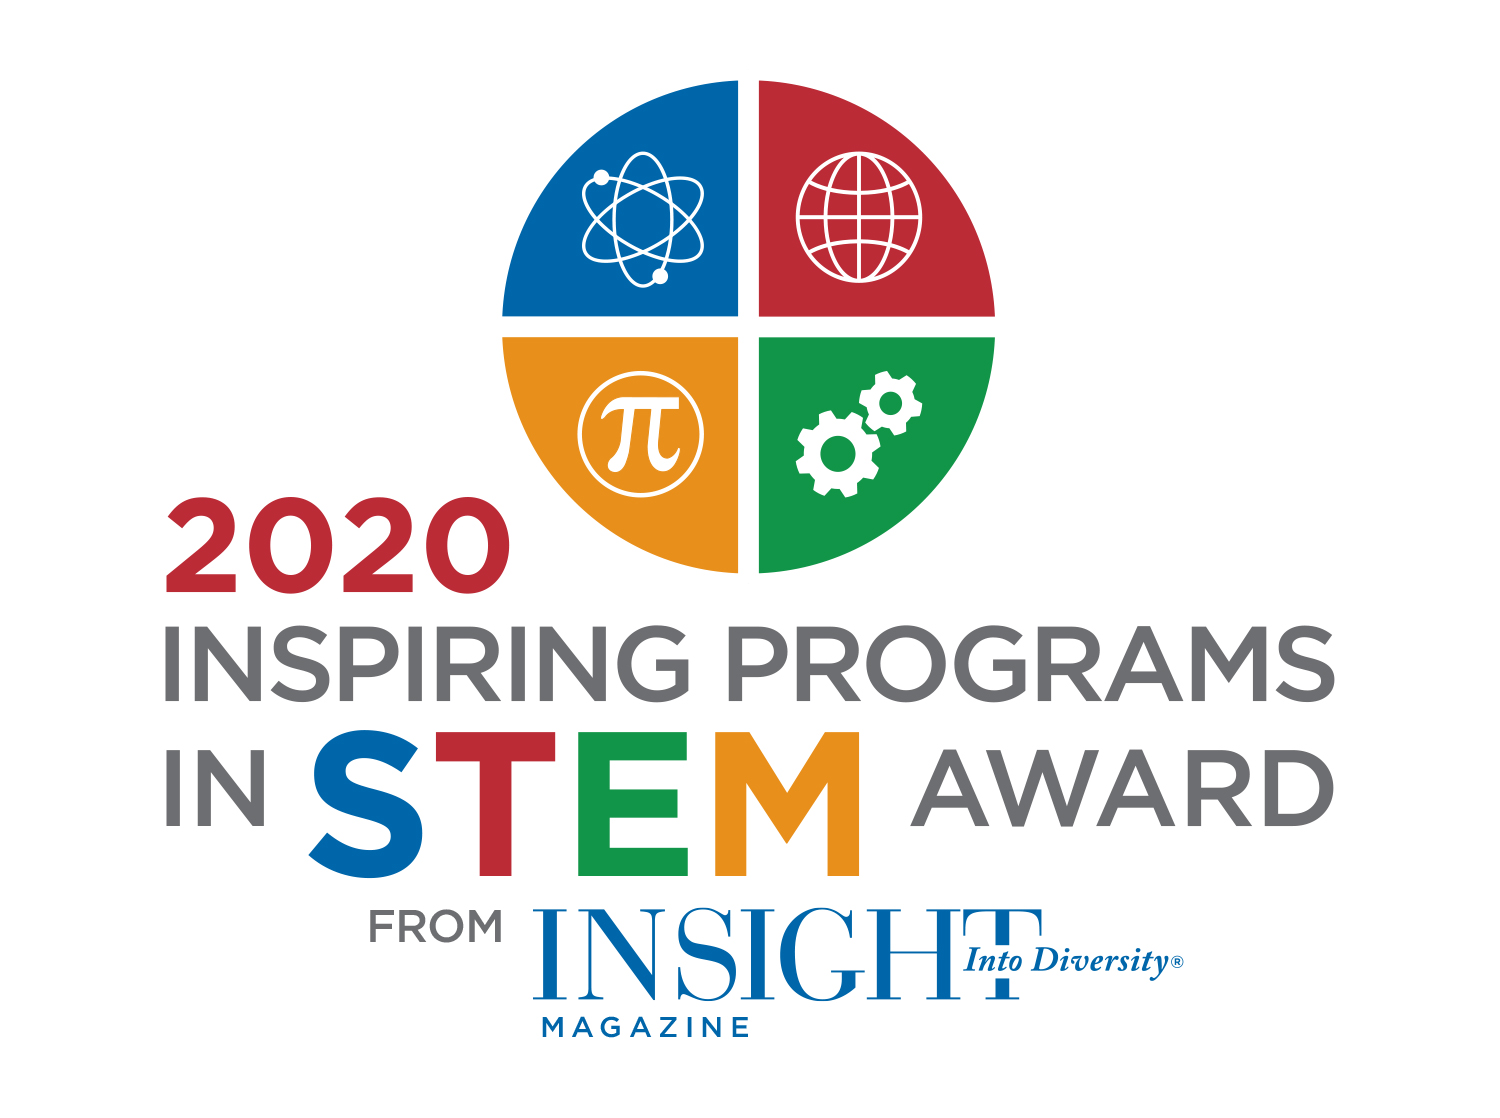 2020 Inspiring Programs in STEM Award, Insight Into Diversity